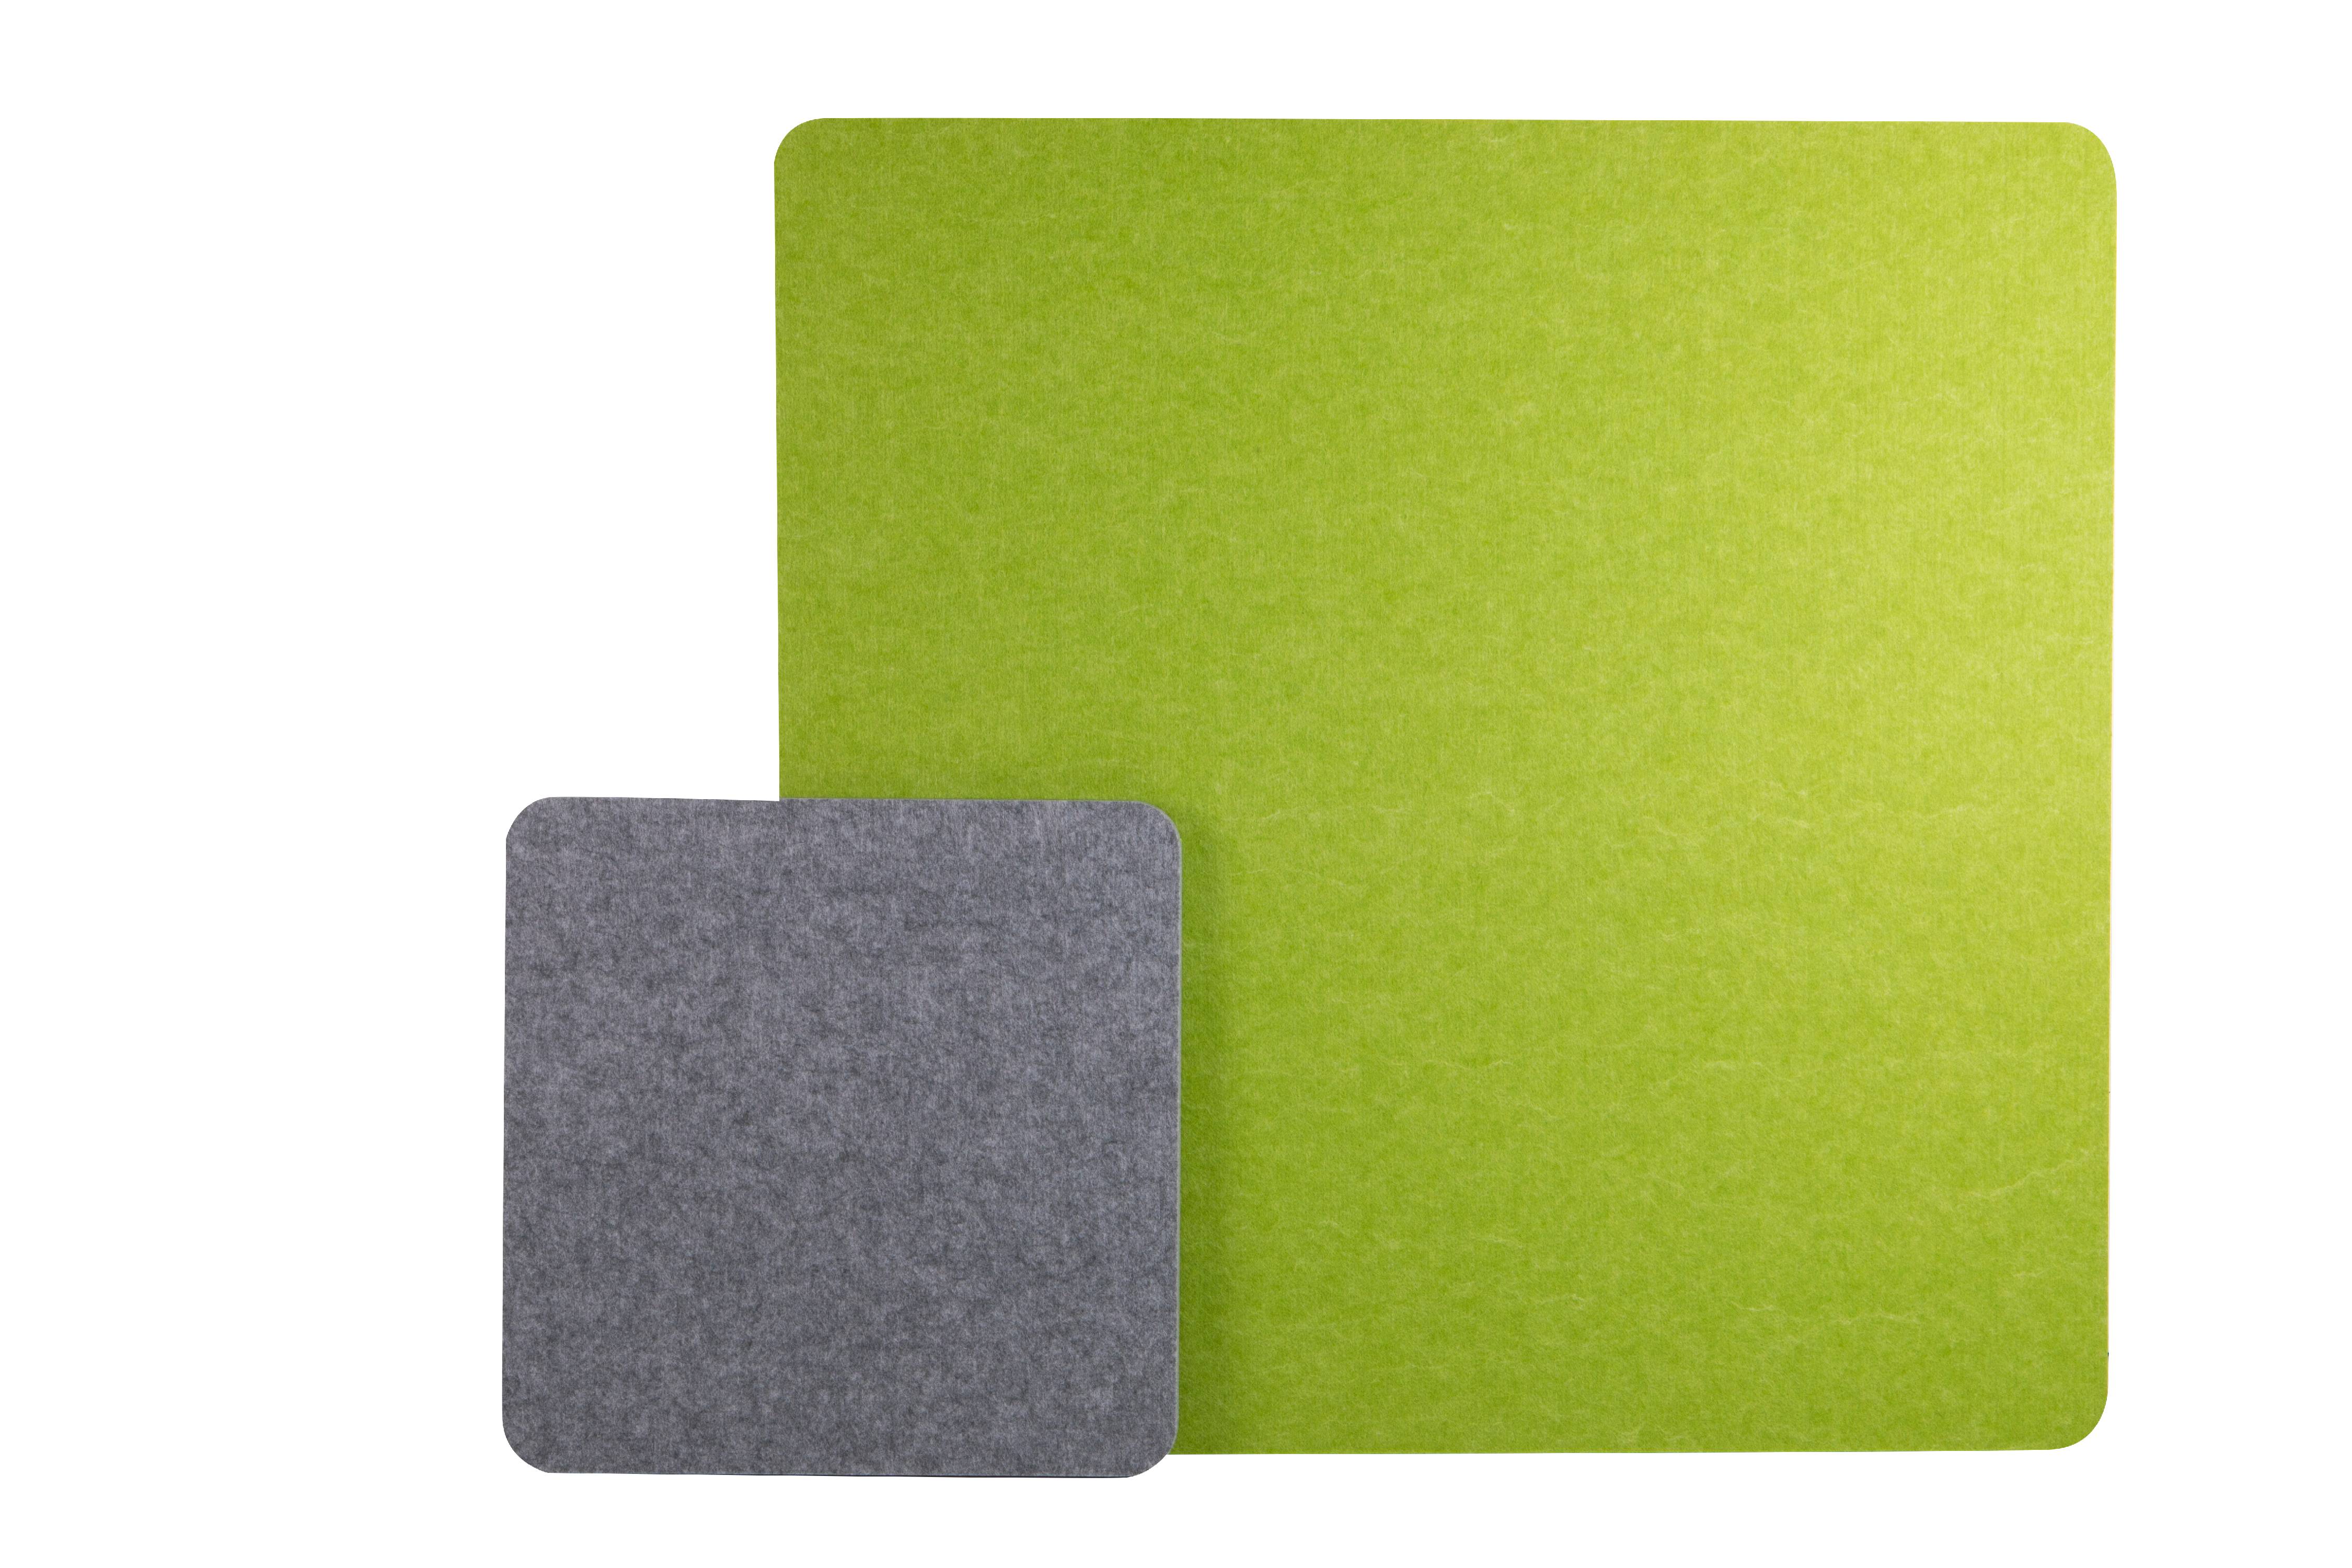 Lumeah  Sound Dampening Pinnable Tile Panel, 11.5"H x 11.5" W, 12 Pack Grey - image 5 of 5